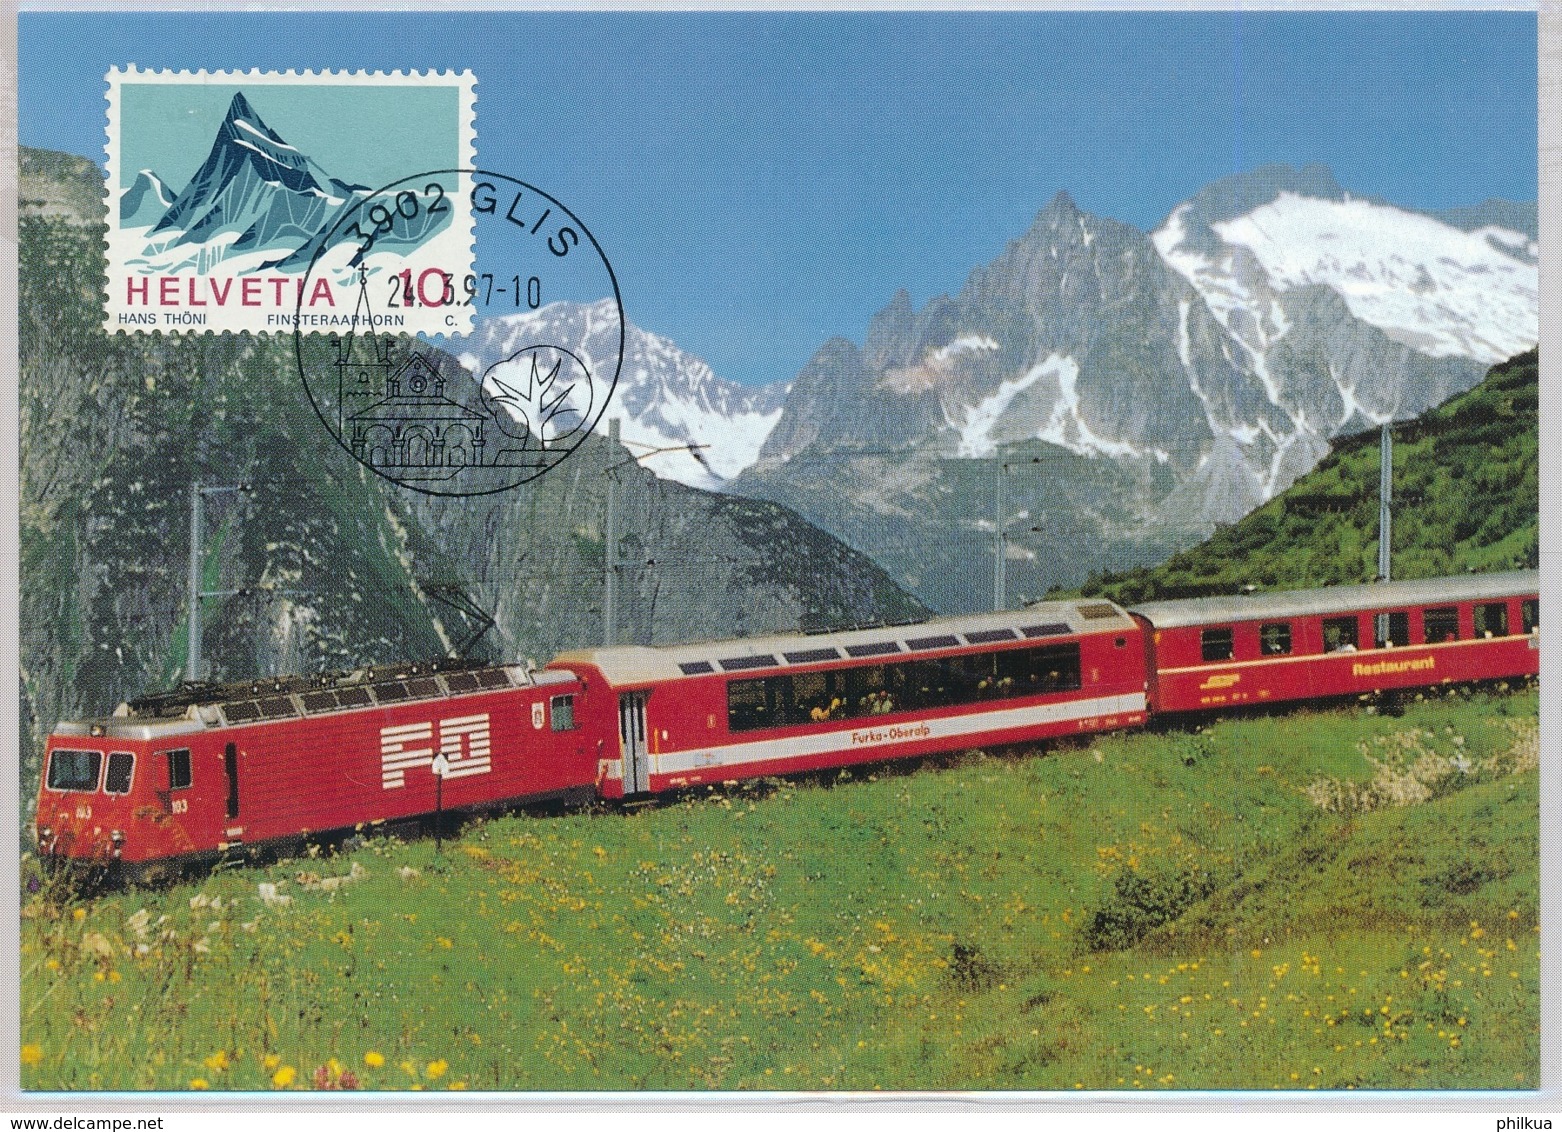 BAHNPOST - Furka - Oberalp Bahn FO - Glis - Maximumkarte - Spoorwegen